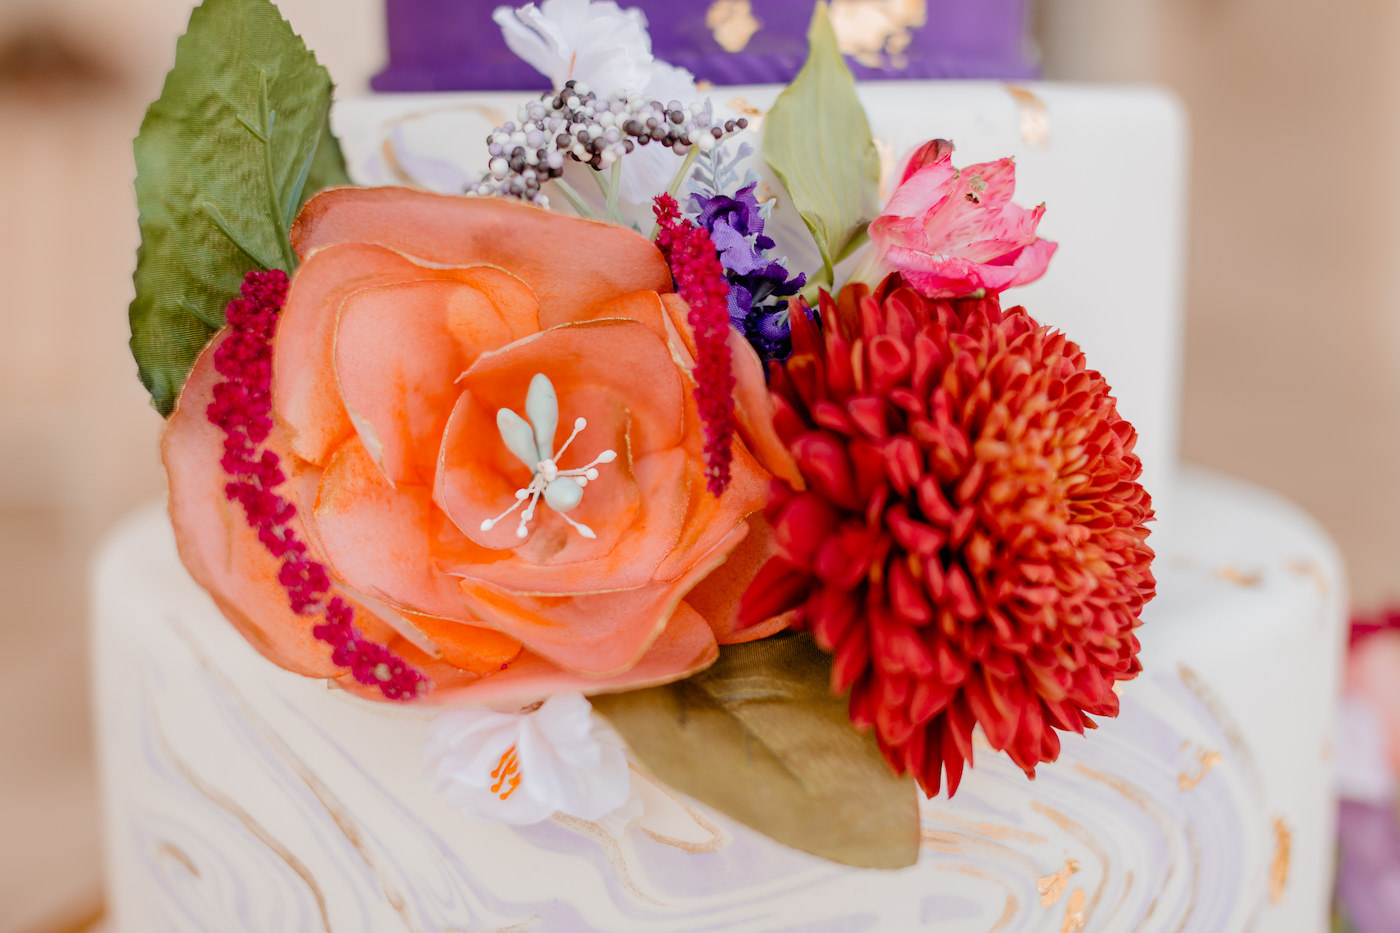 Boho Glam Wedding Cake | Three Tier Purple Marbled Fondant Wedding Cake with Golf Leaf Flecks and Jewel Tone Red and Orange Roses